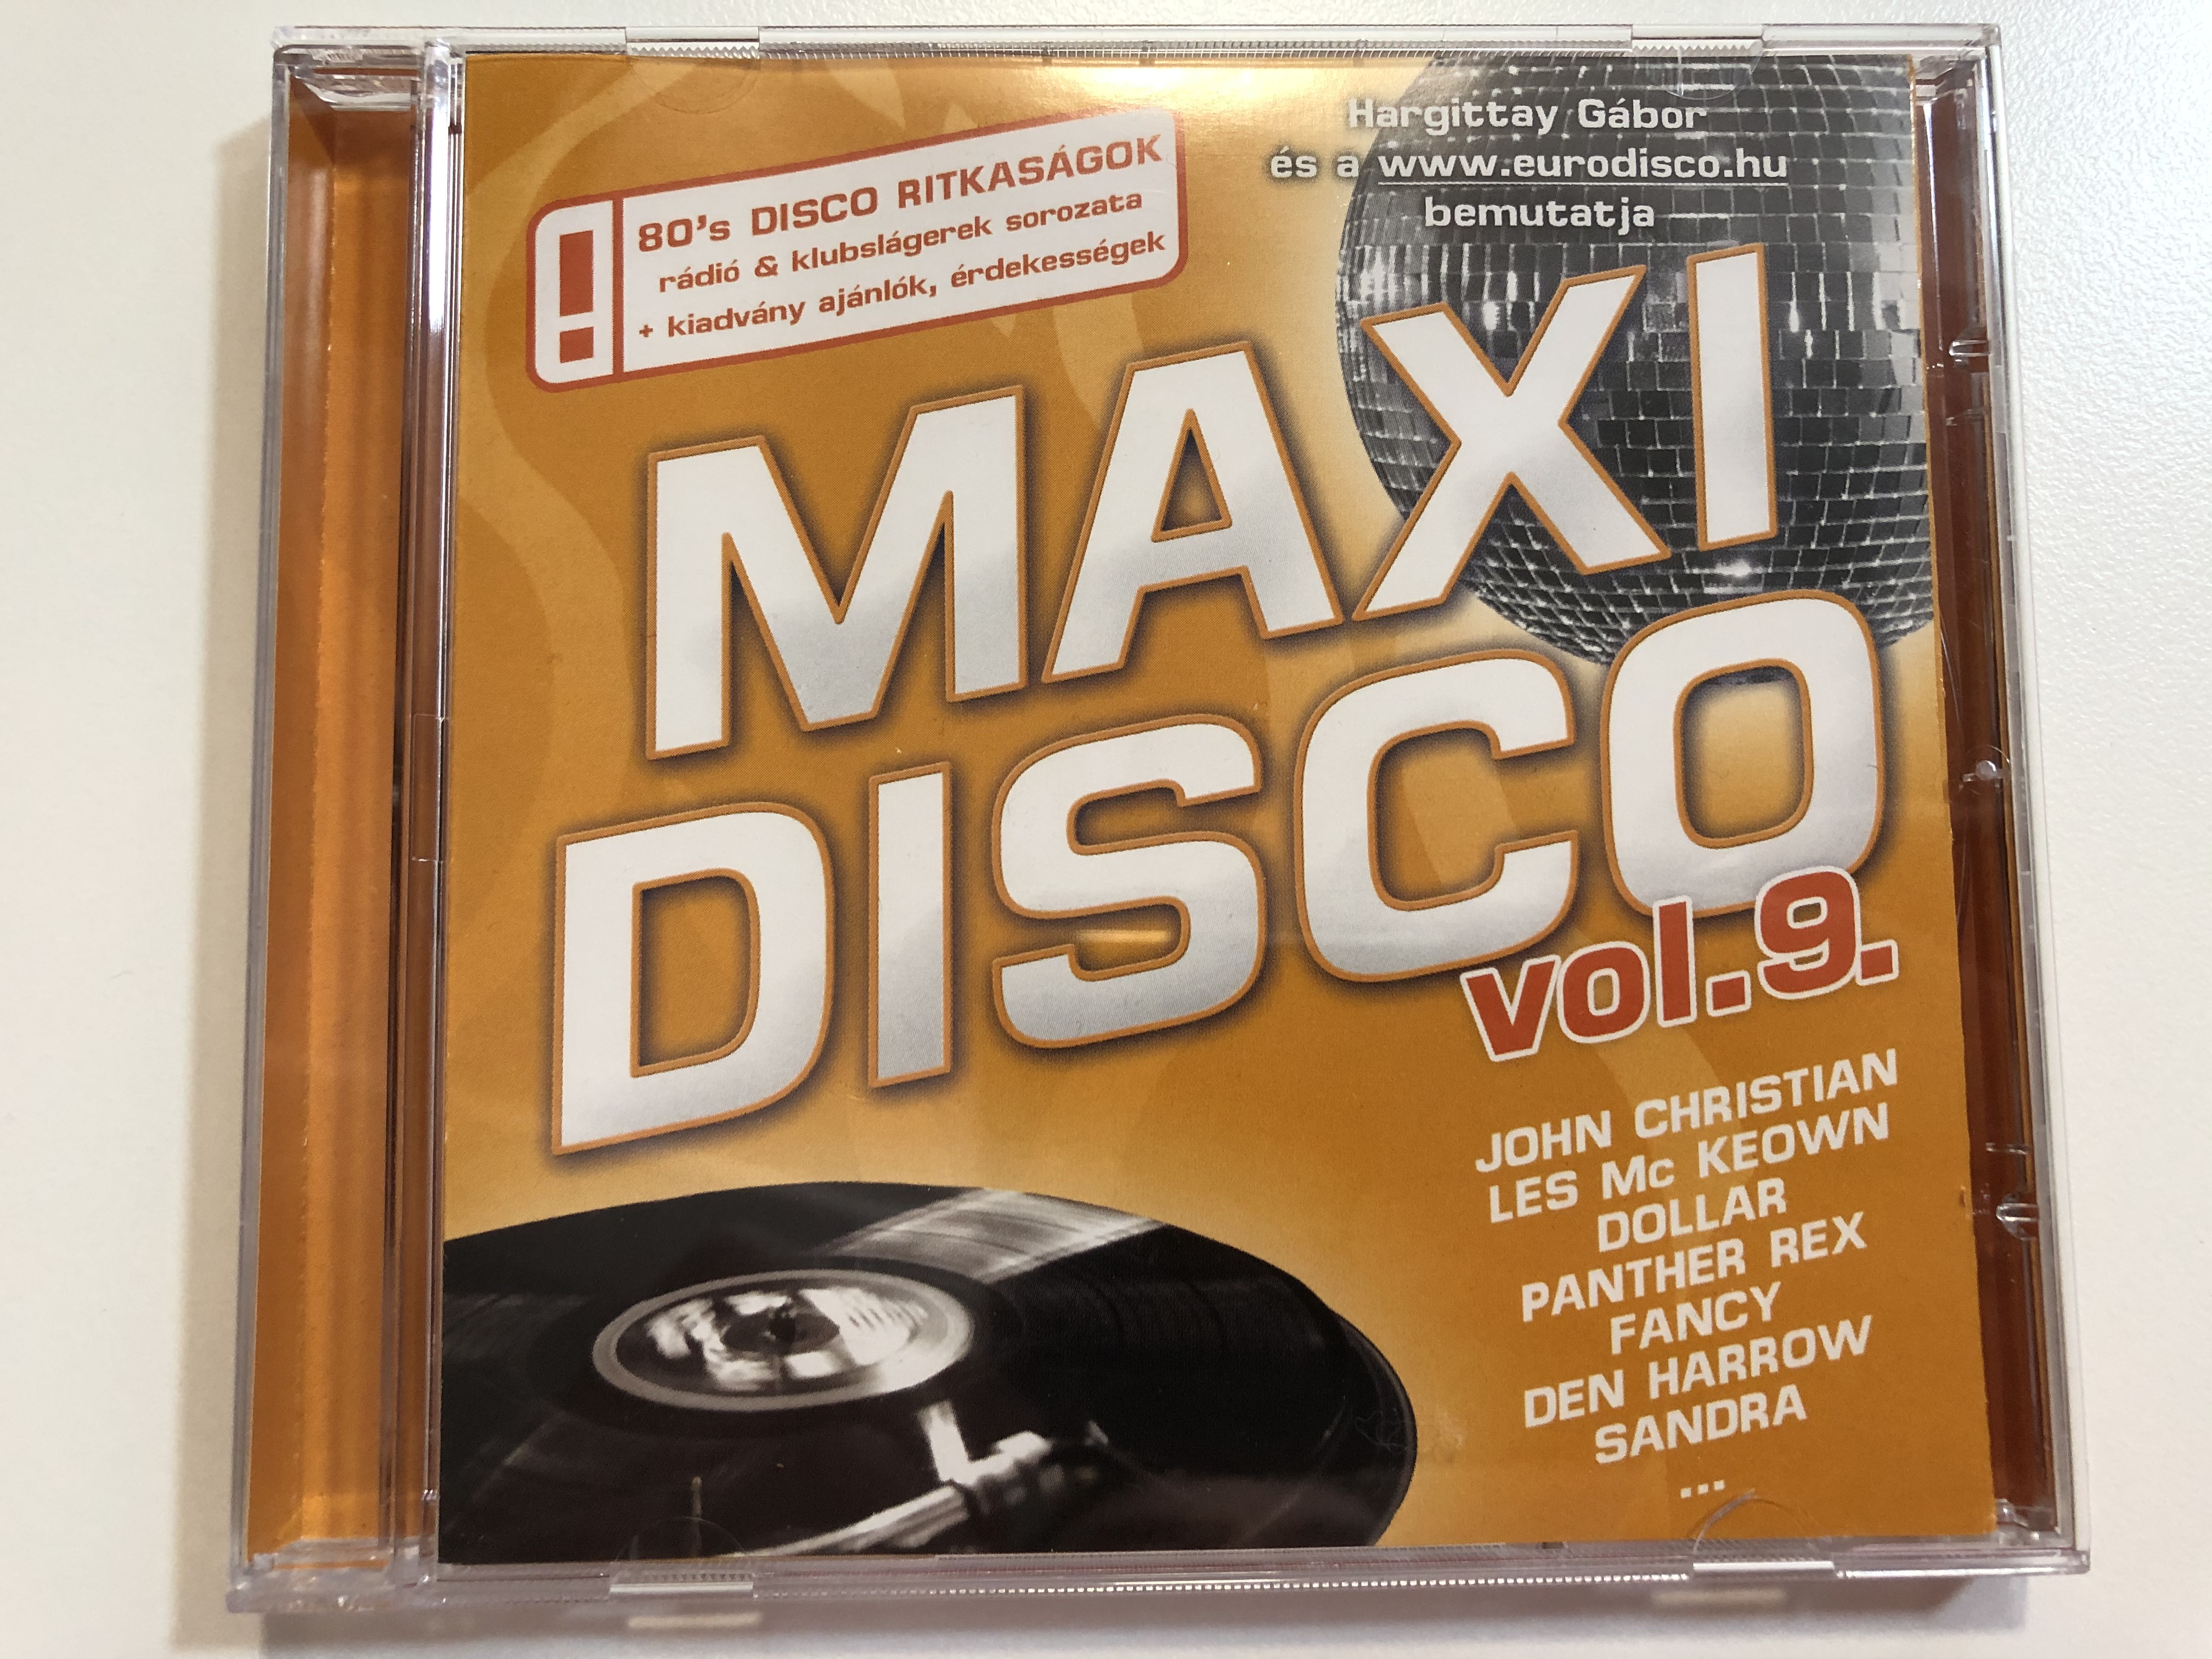 maxi-disco-vol.-9.-john-christian-les-mckeown-dollar-panther-rex-fancy-den-harrow-sandra...-80-s-disco-ritkasagok-radio-klubslagerek-sorozata-kiadvany-ajanlok-erdekessegek-harg-1-.jpg